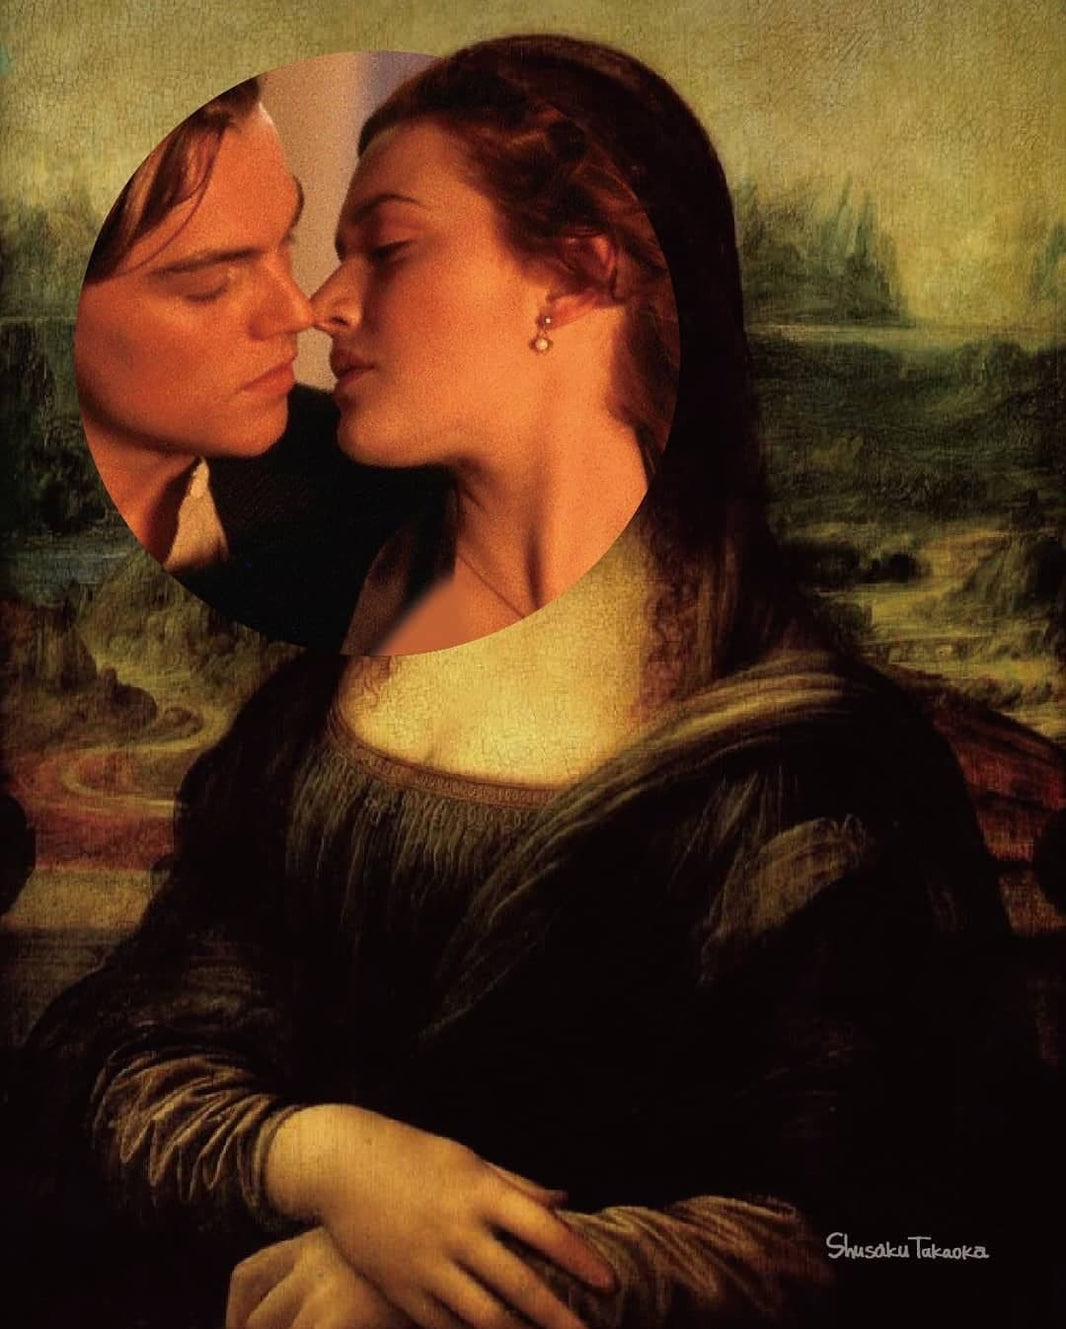 Leonardo di'Caprio